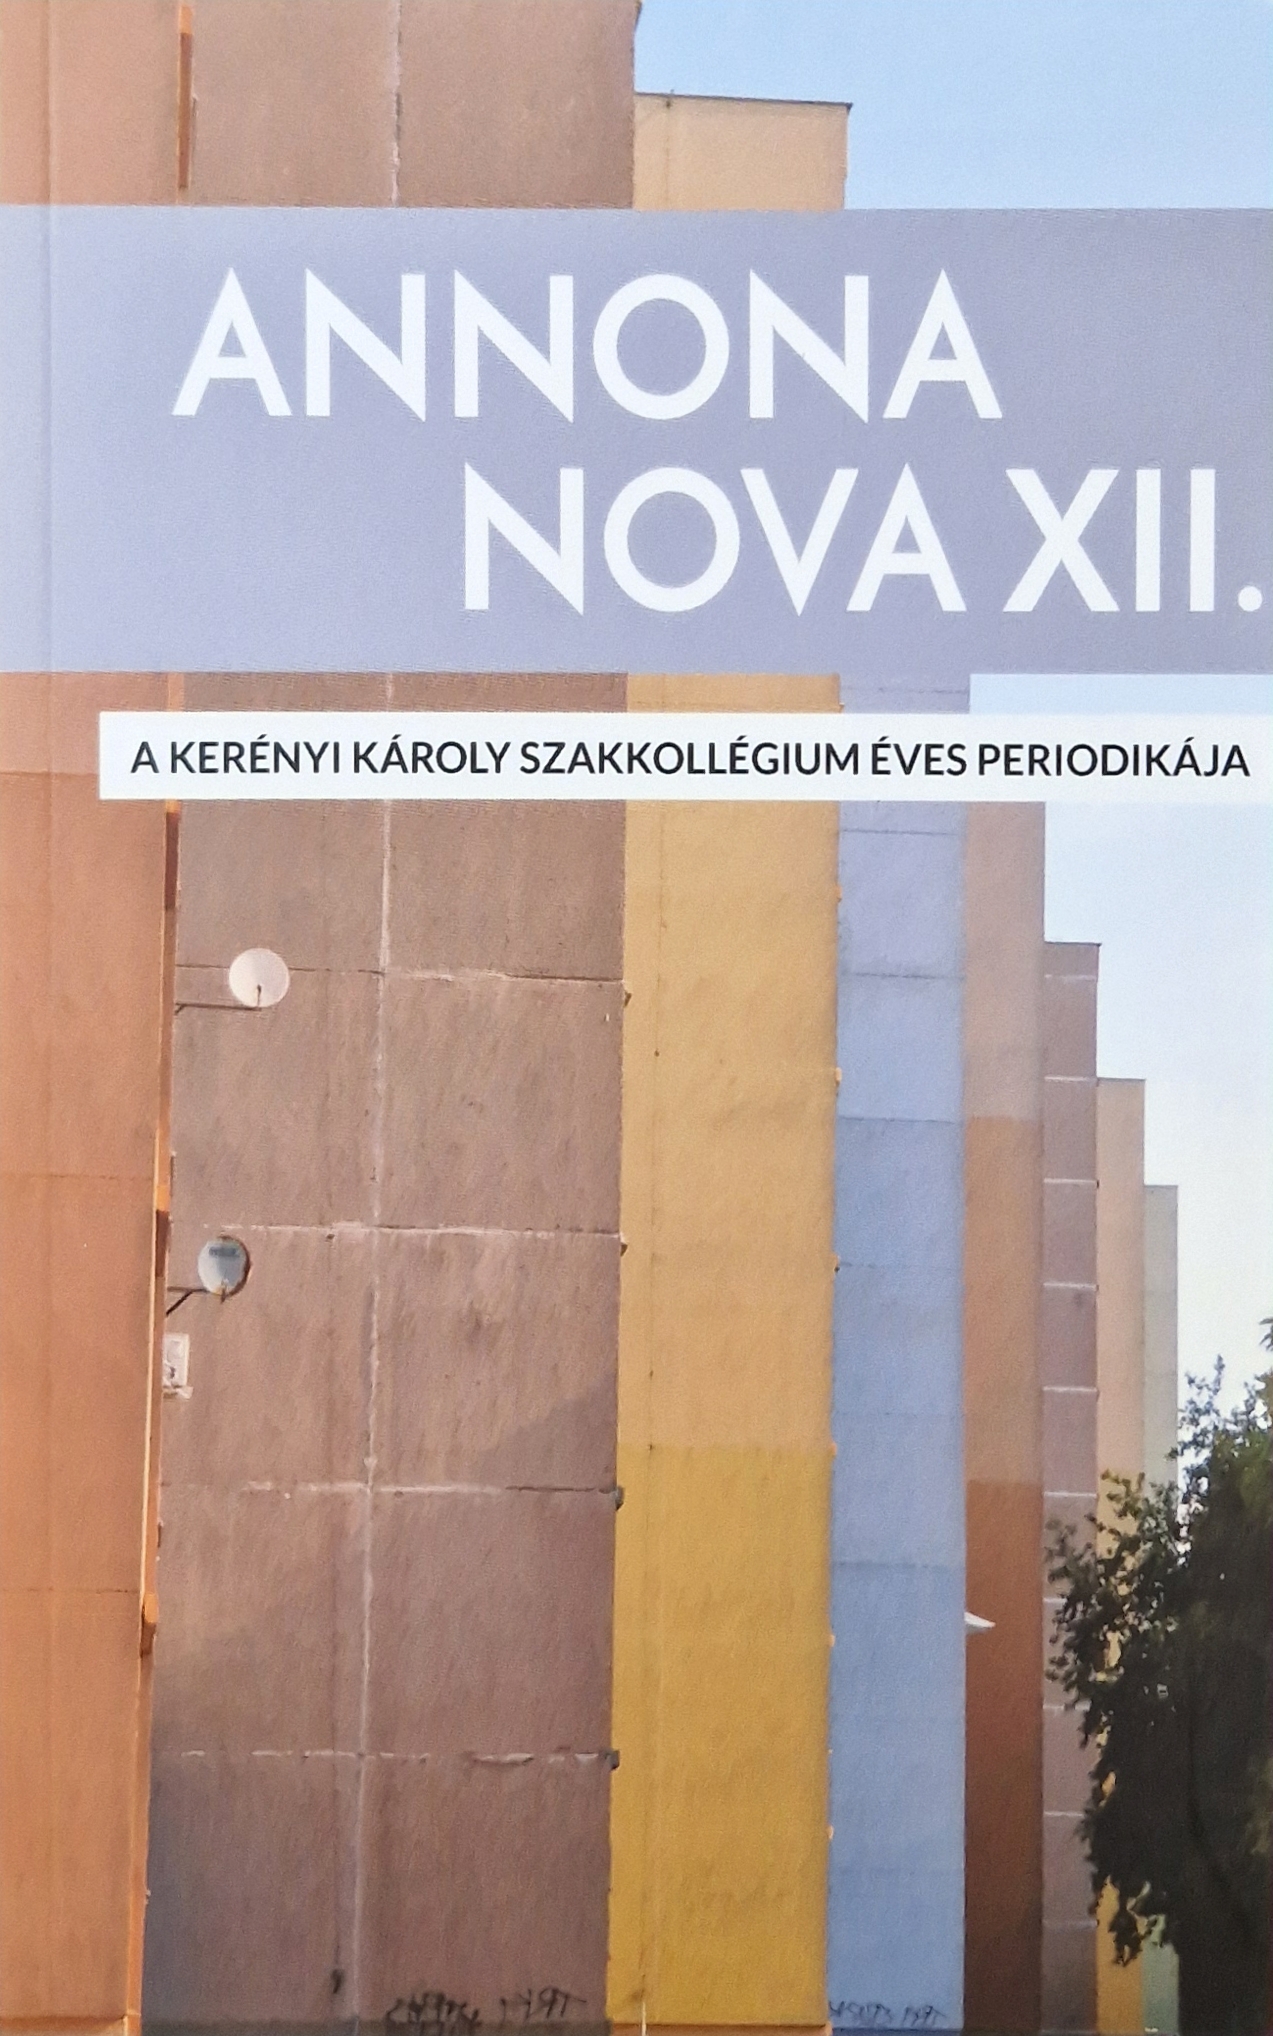 					View No. XII (2021): Annona Nova
				